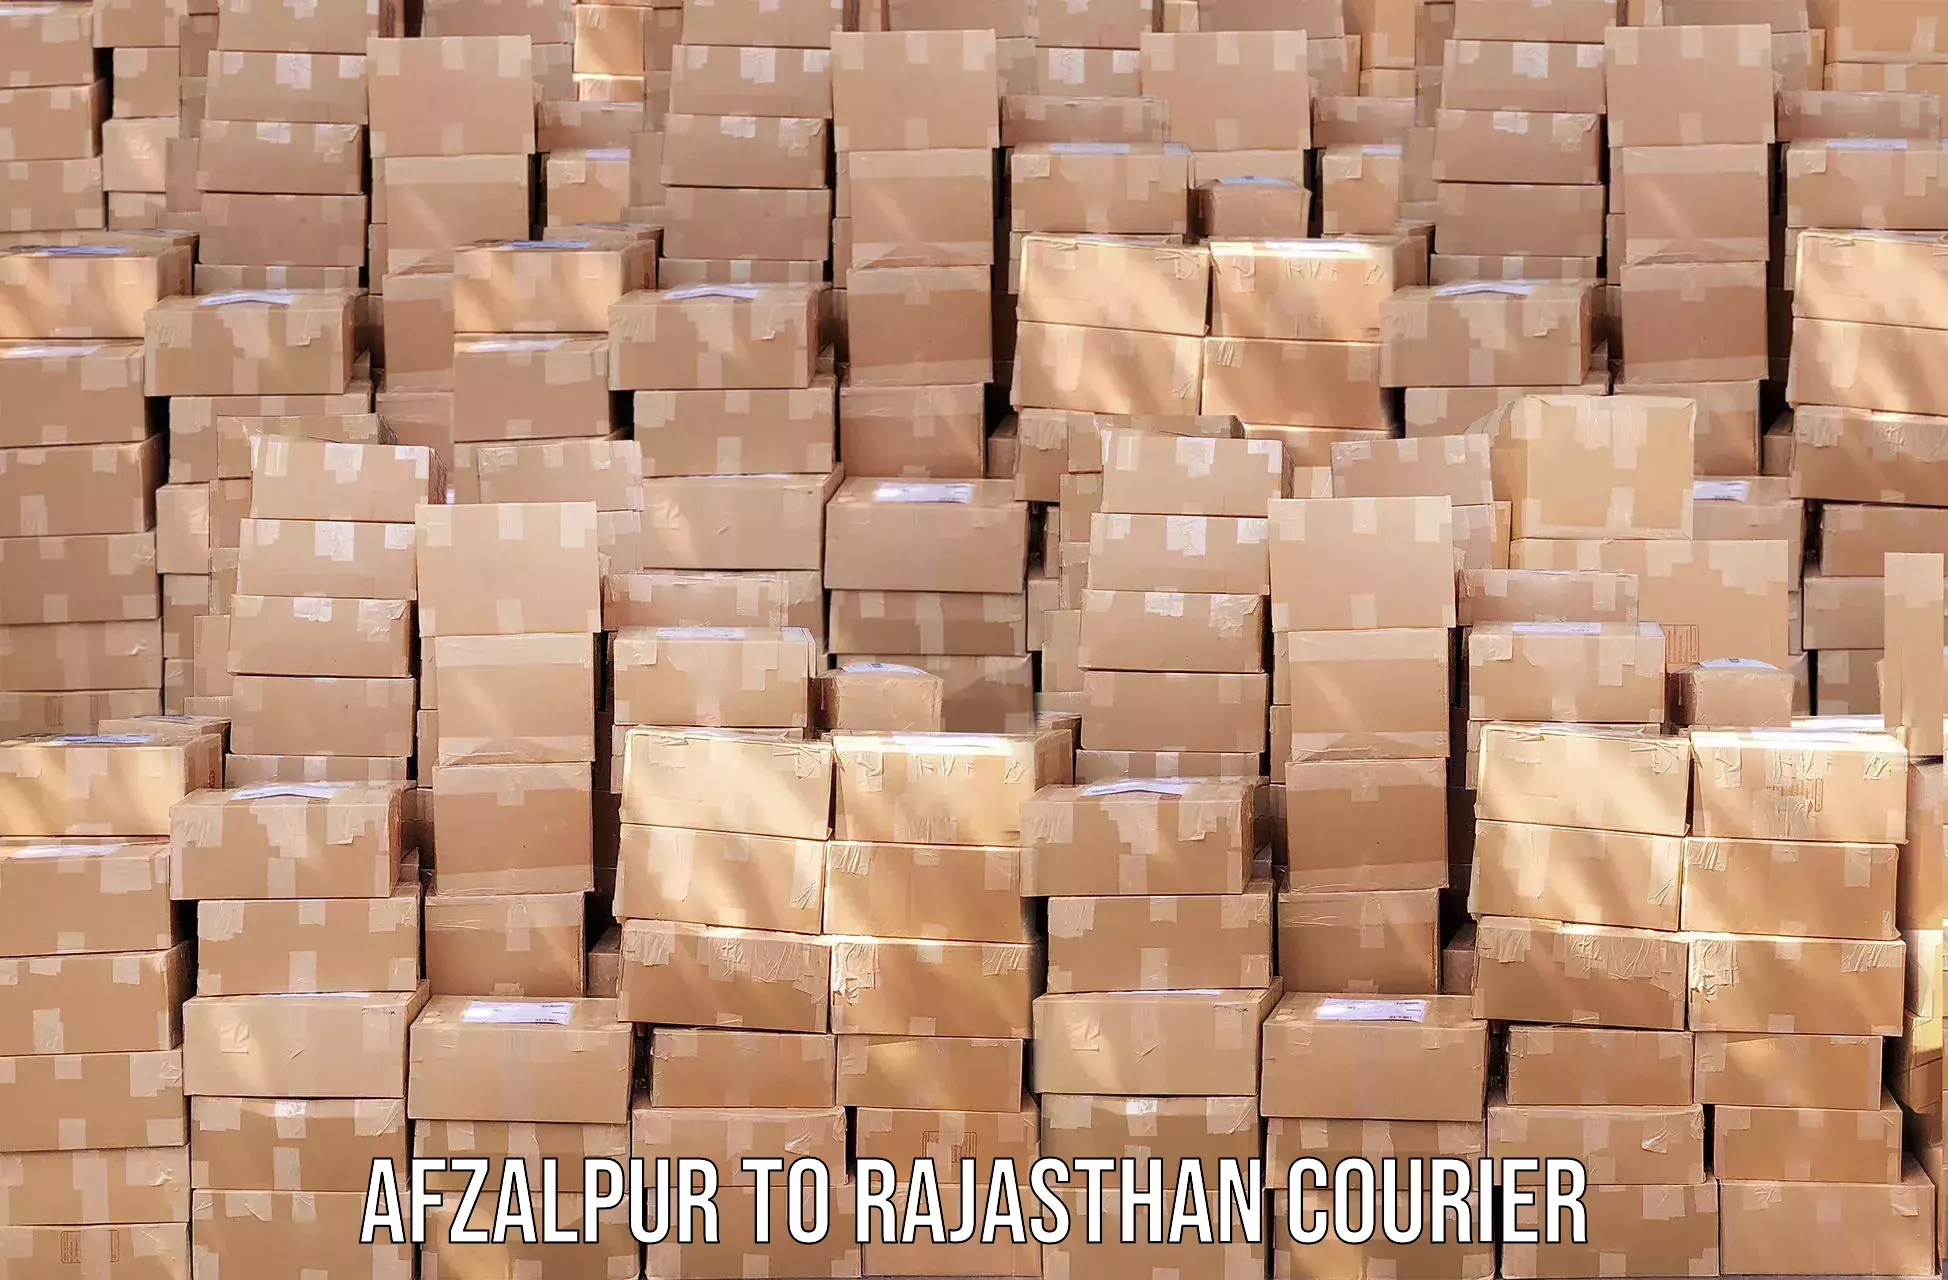 Cash on delivery service Afzalpur to Kotputli